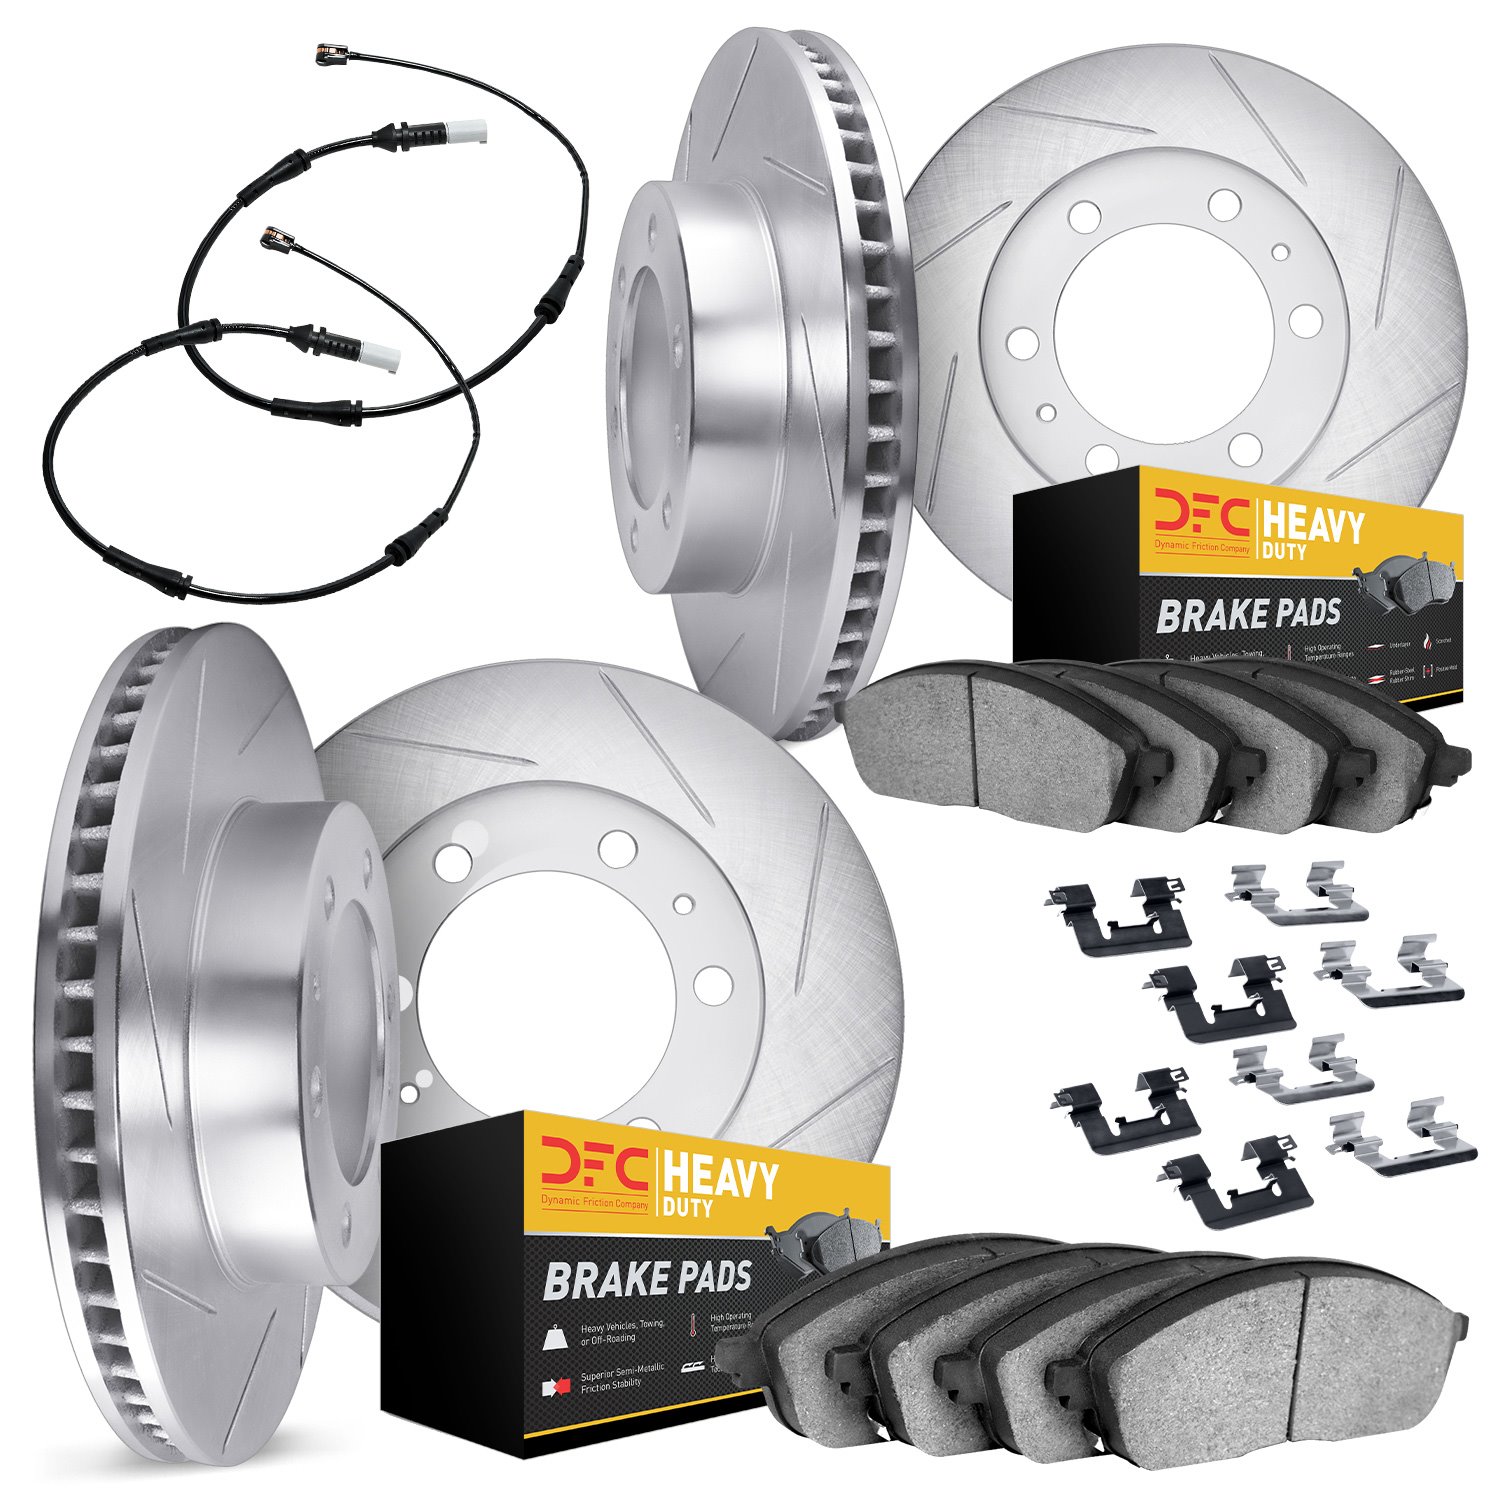 5224-40011 Slotted Brake Rotors w/Heavy-Duty Brake Pads Kits [Silver] includes Sensor & Hardware, Fits Select Multiple Makes/Mod